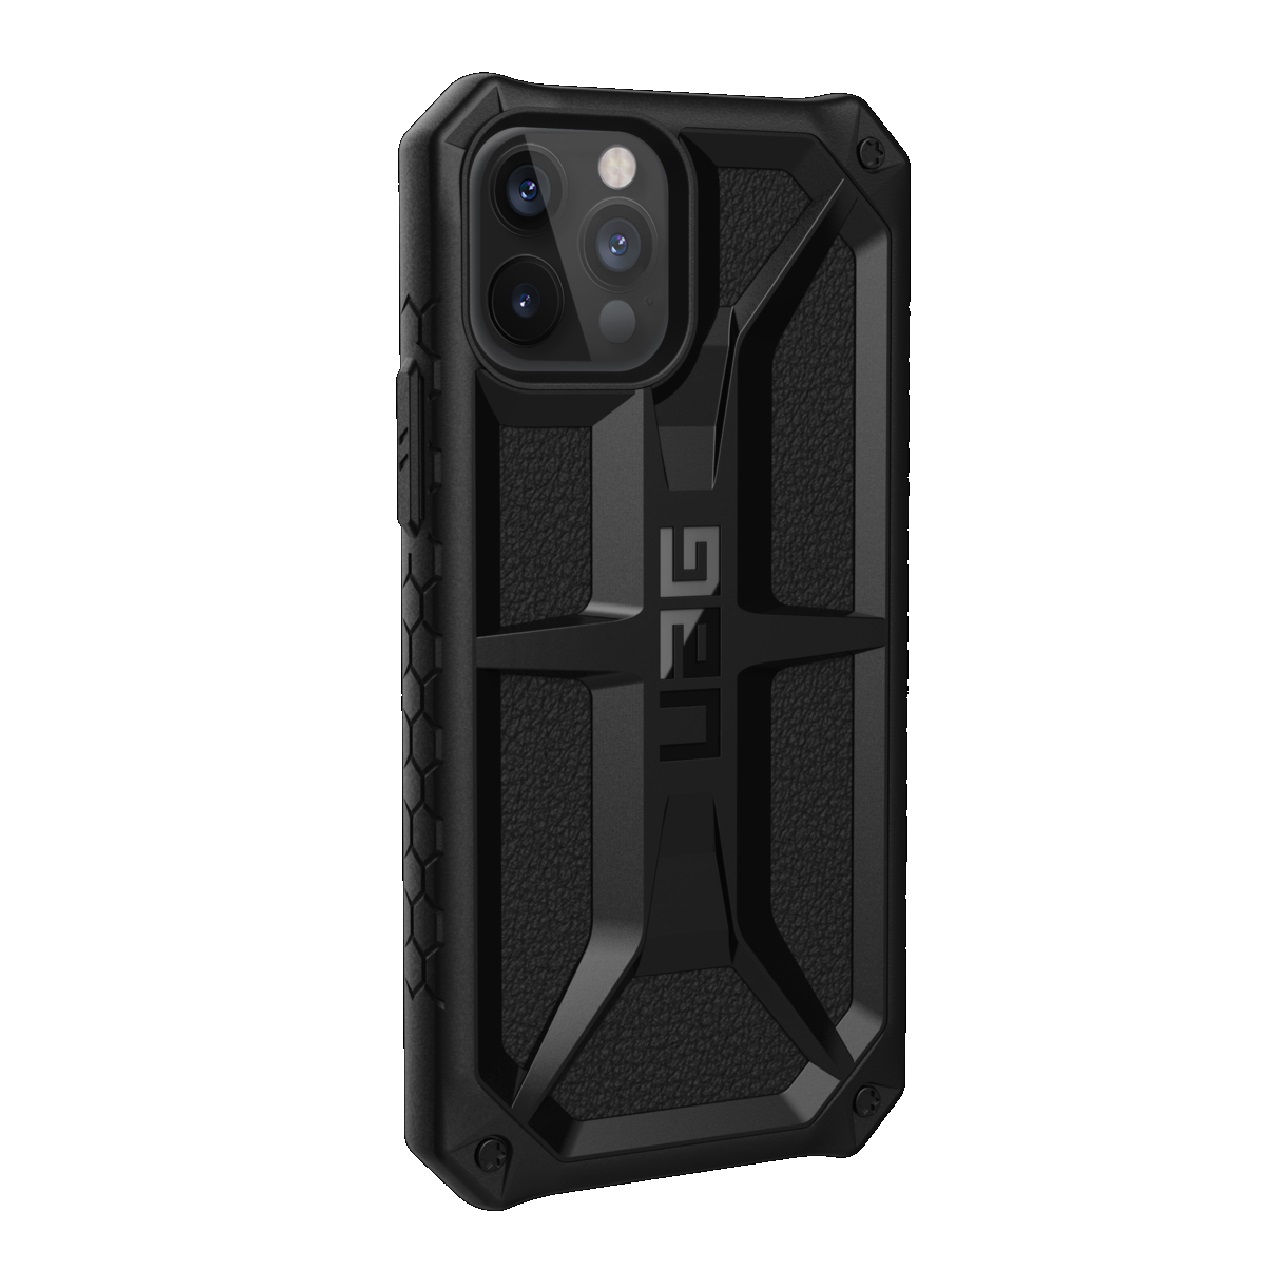 UAG Monarch Apple iPhone 12 /iPhone 12 Pro Case – Black (112351114040), Soft Impact-Resistant Core, Raised Screen Surround,Tactical Grip